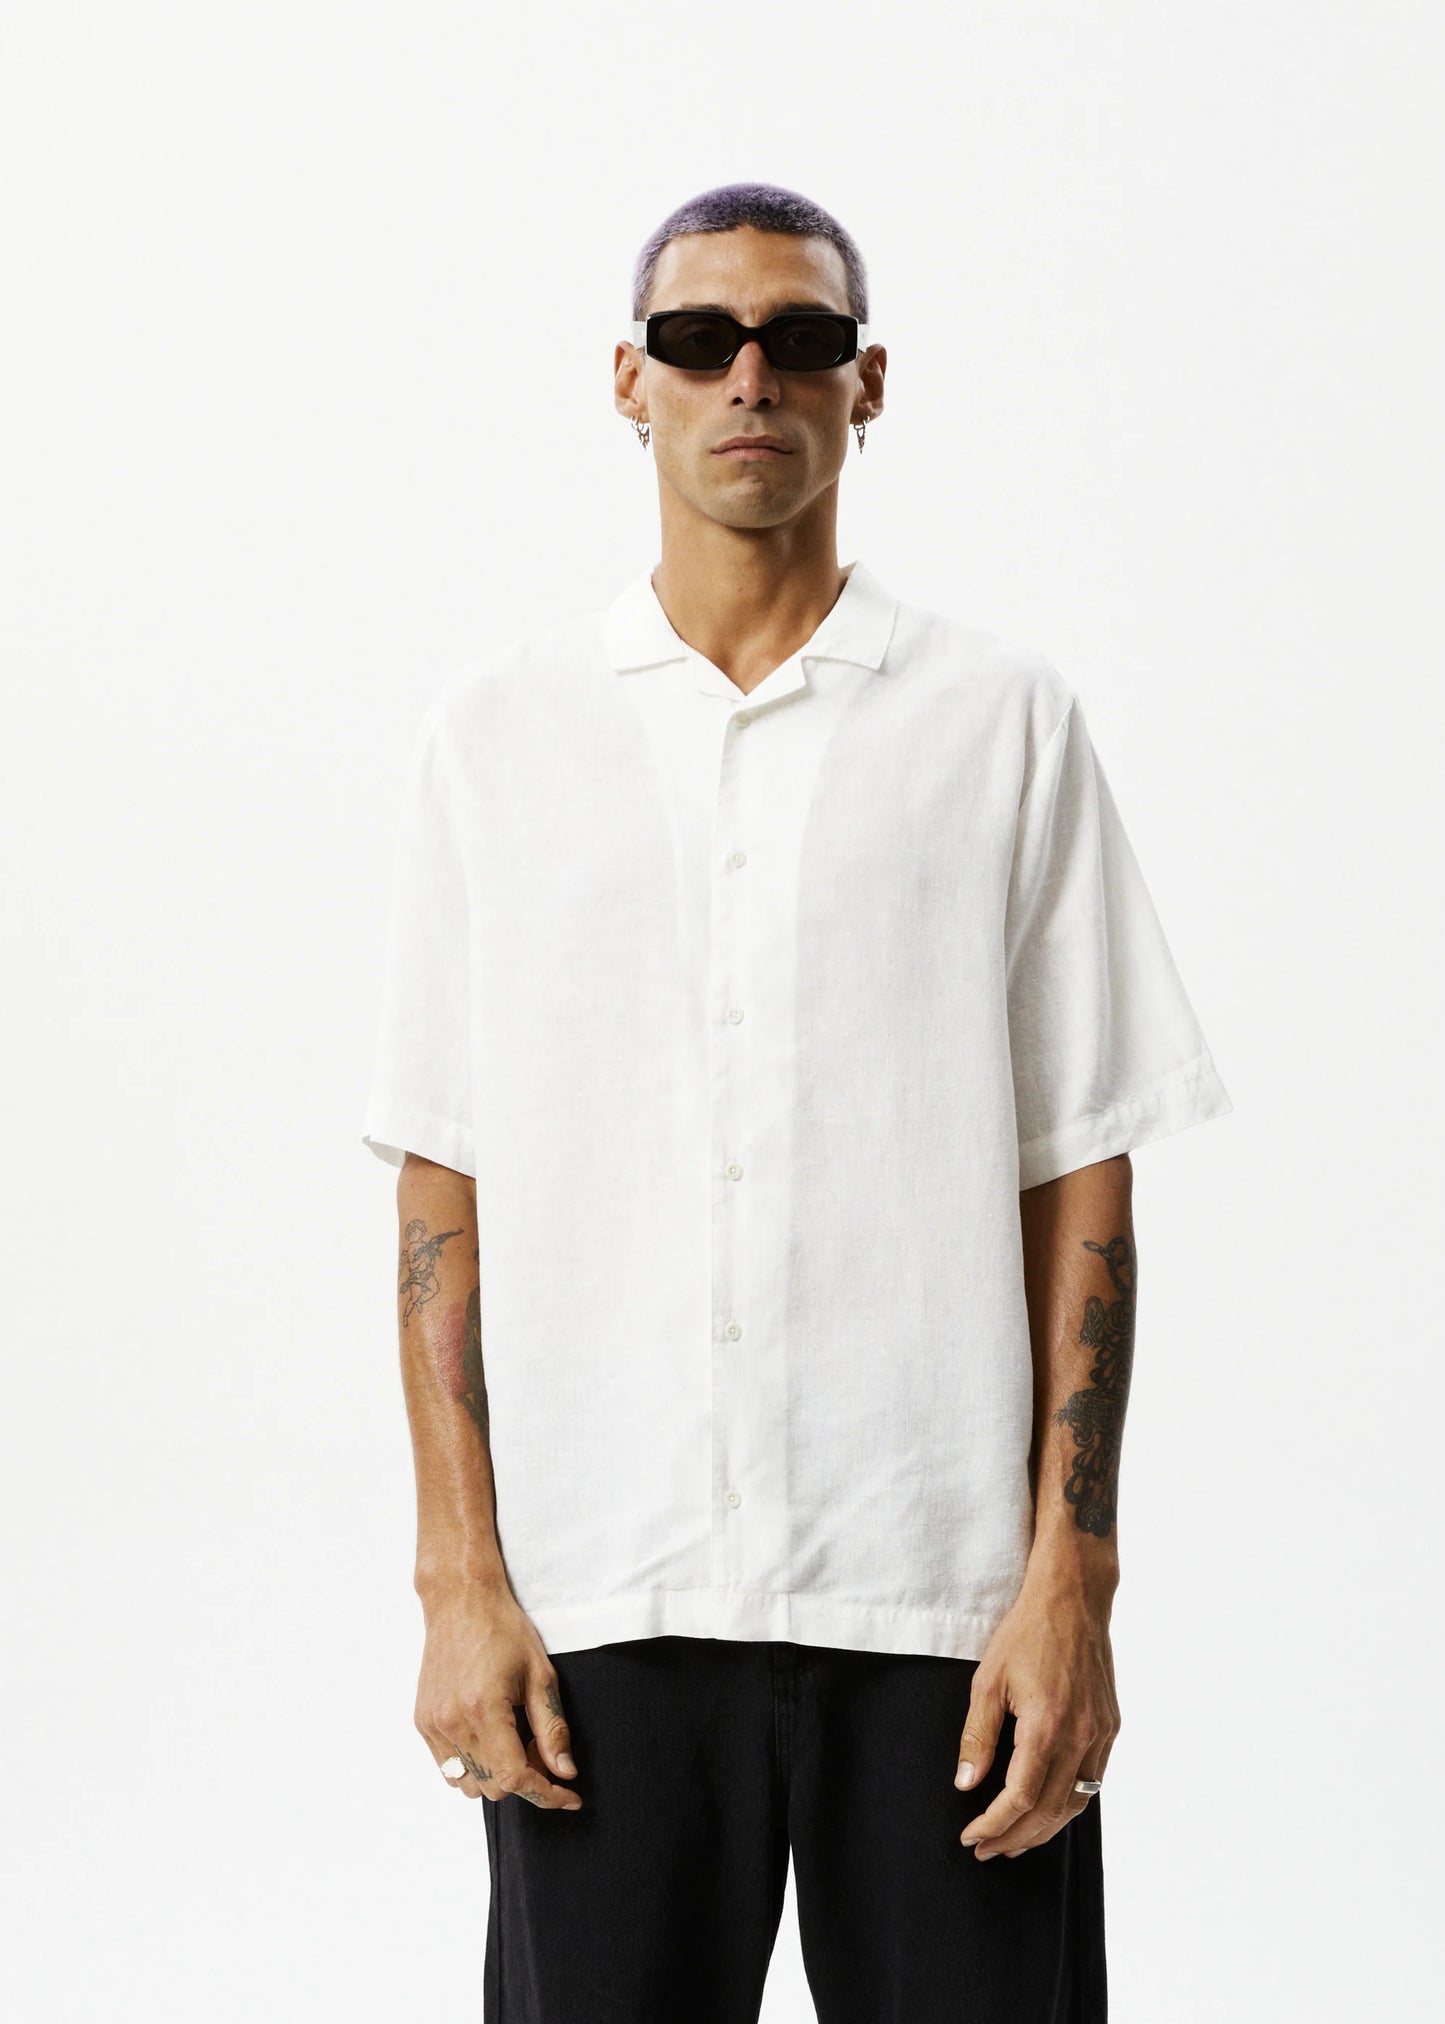 m tops - AFENDS - Daily Hemp Cuban Short Sleeve Shirt - PLENTY